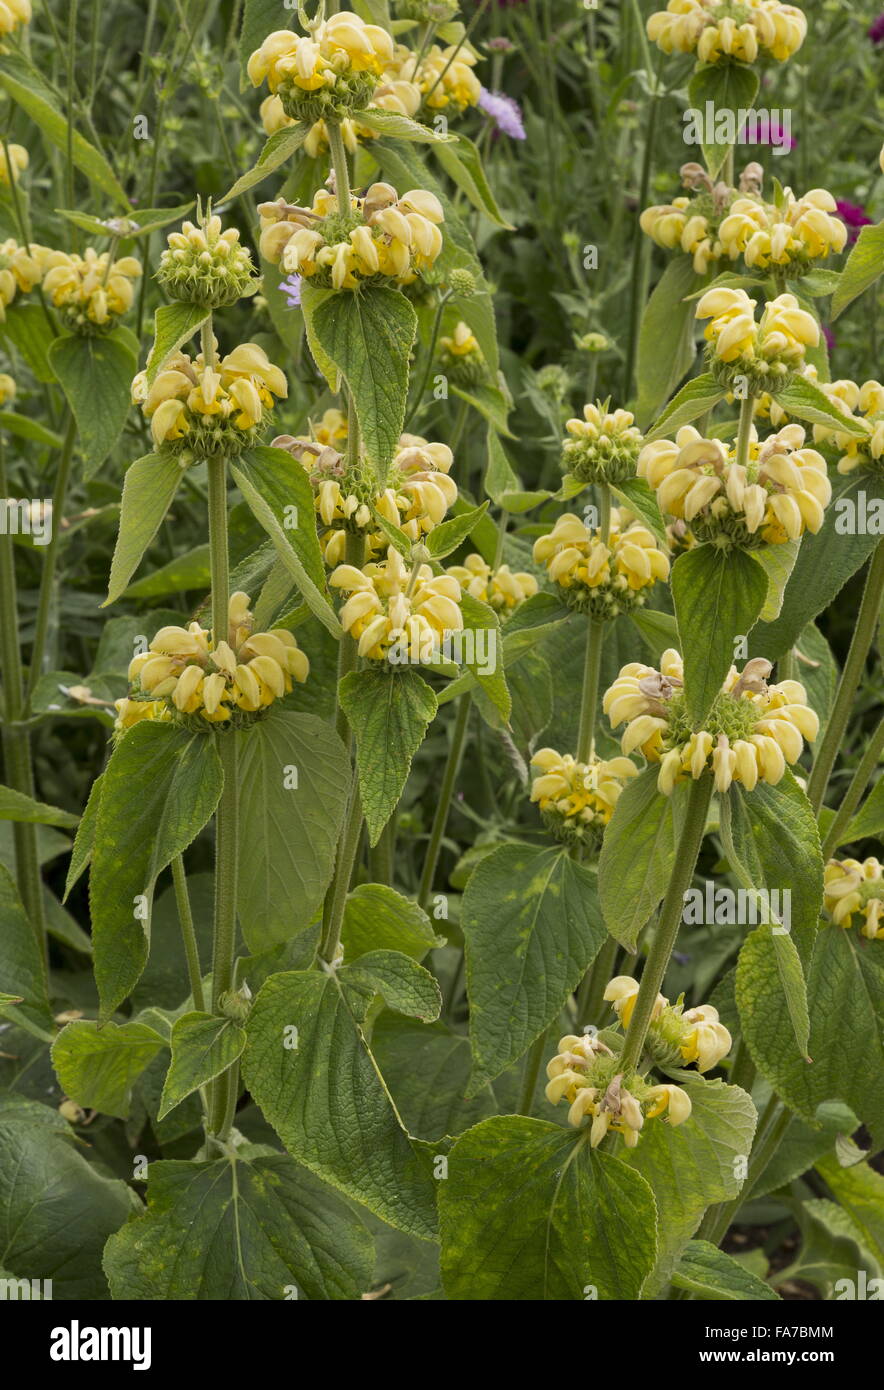 Turkish sage, Phlomis russeliana in flower in garden border. Stock Photo